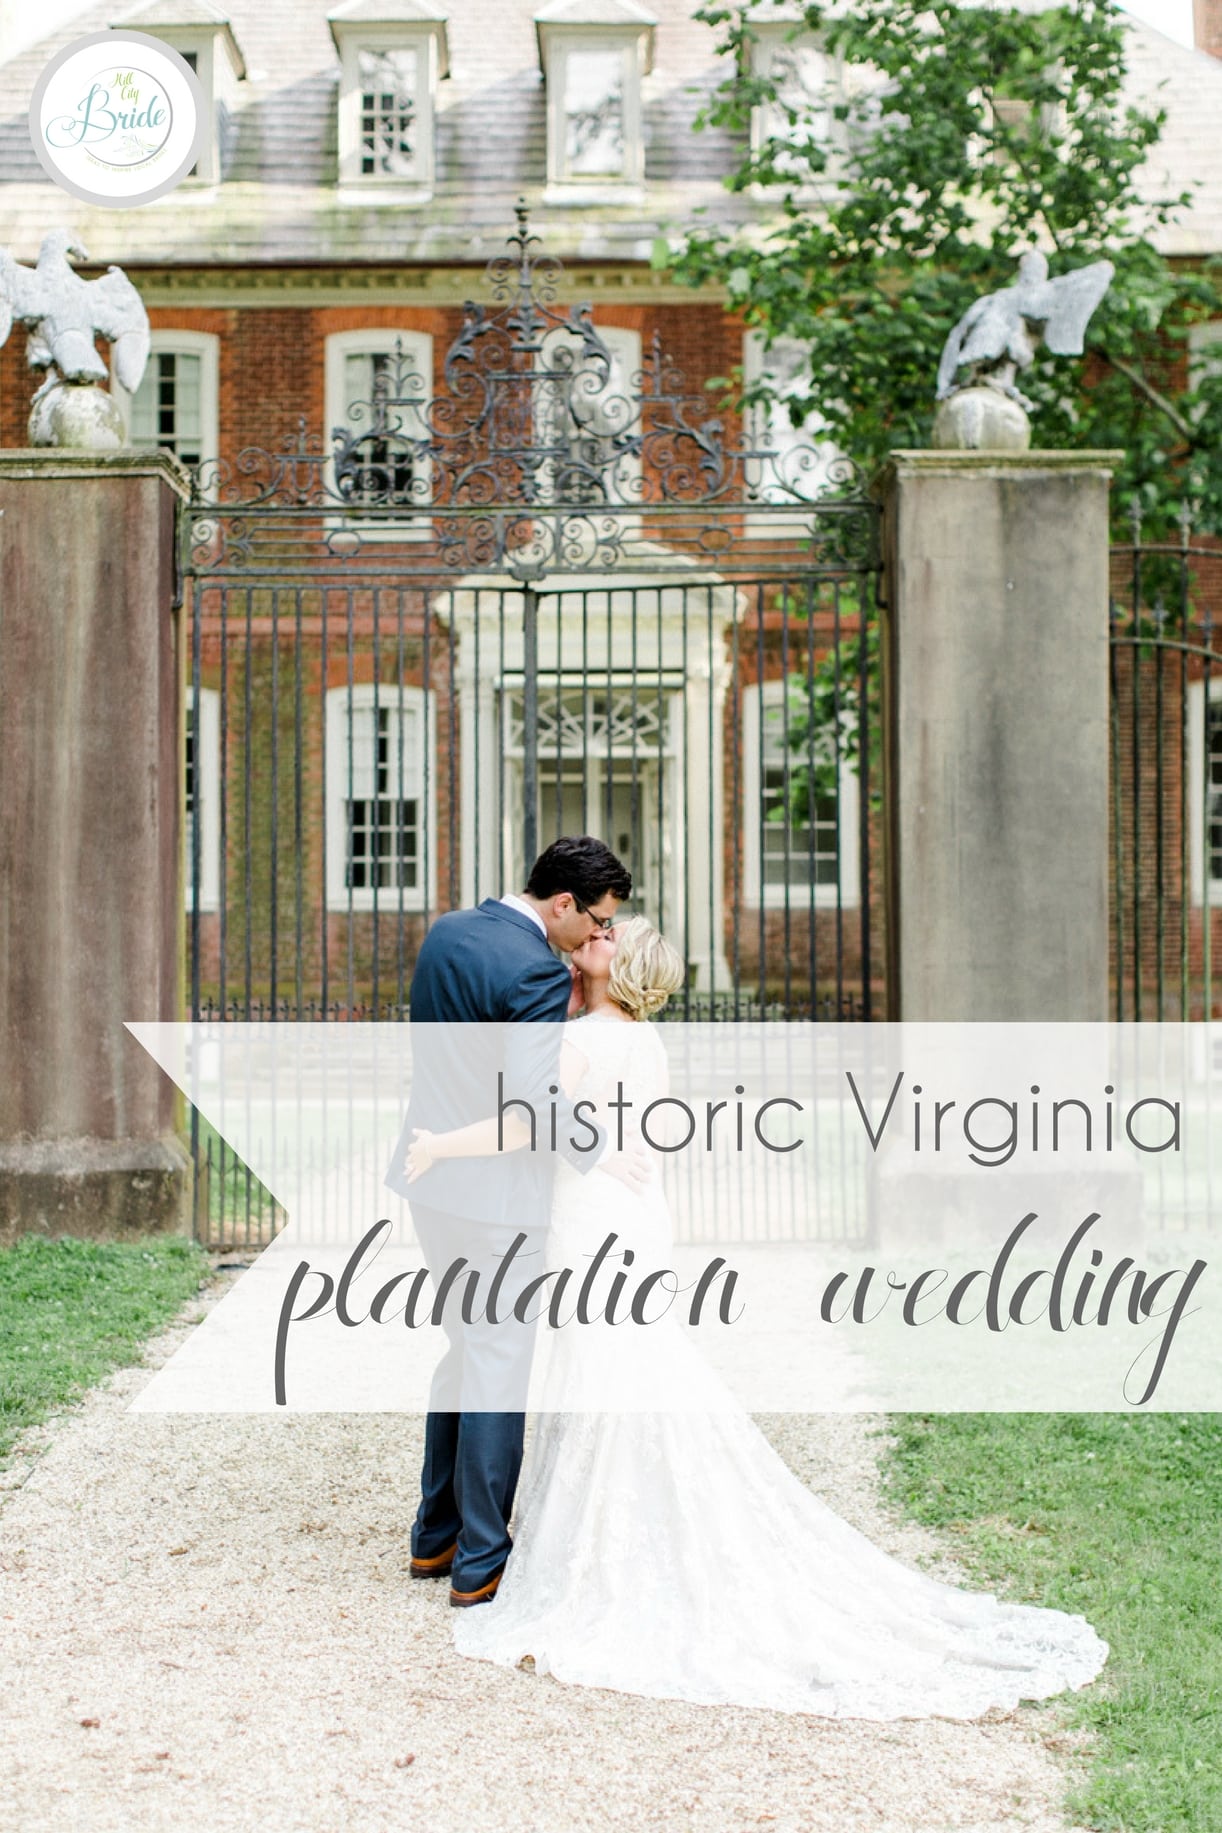 Historic Virginia Plantation Wedding as seen on Hill City Bride Blog Magazine